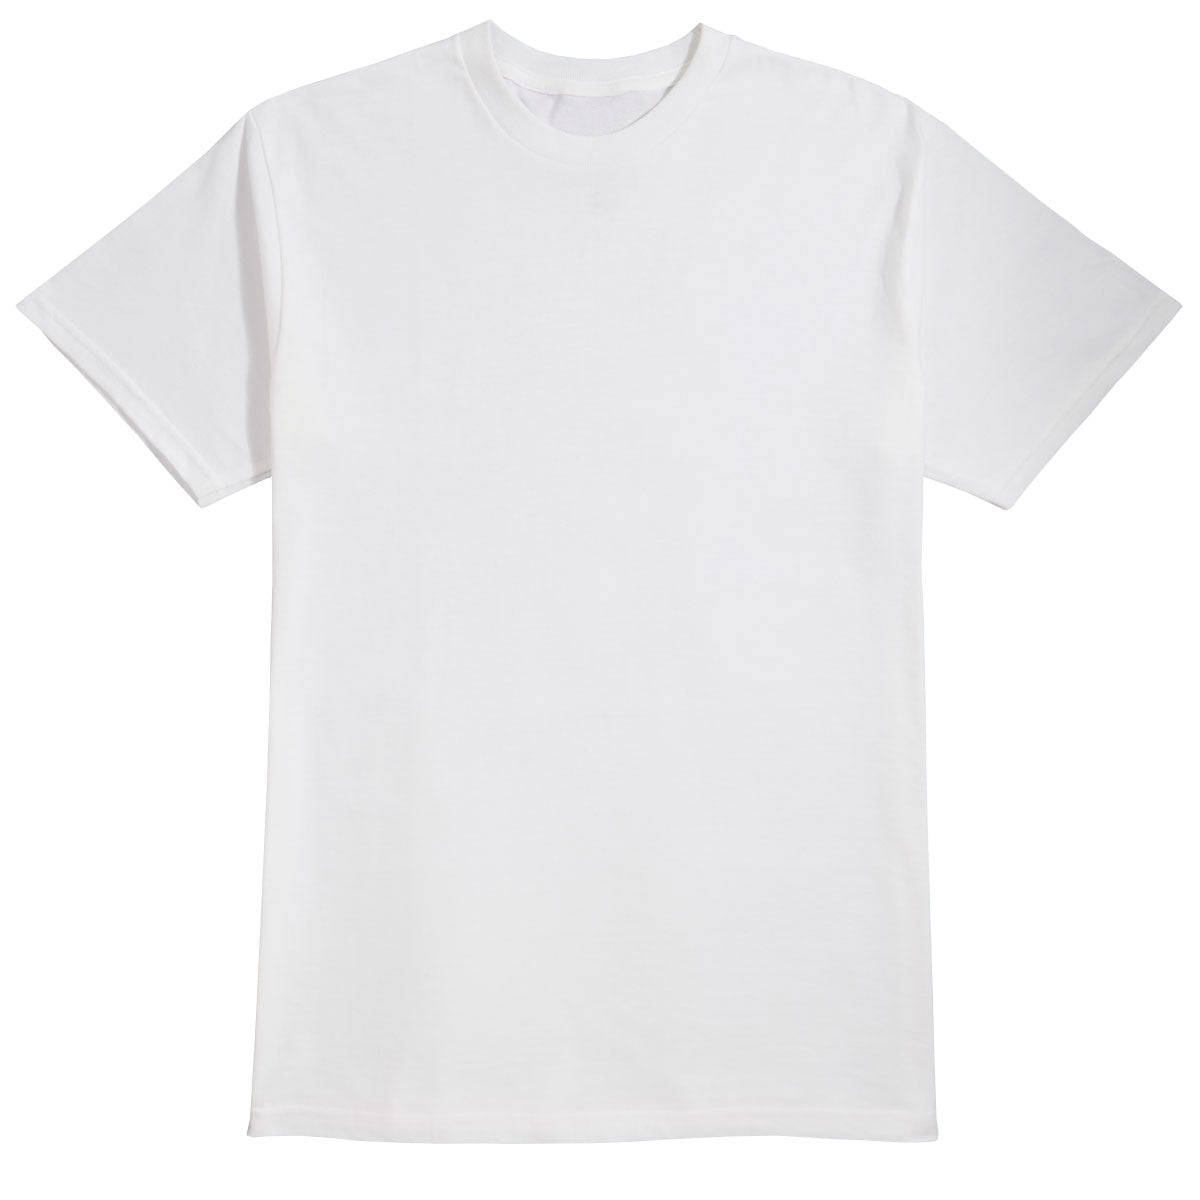 Converse Flash Sheet T-Shirt - White - XXL image 1